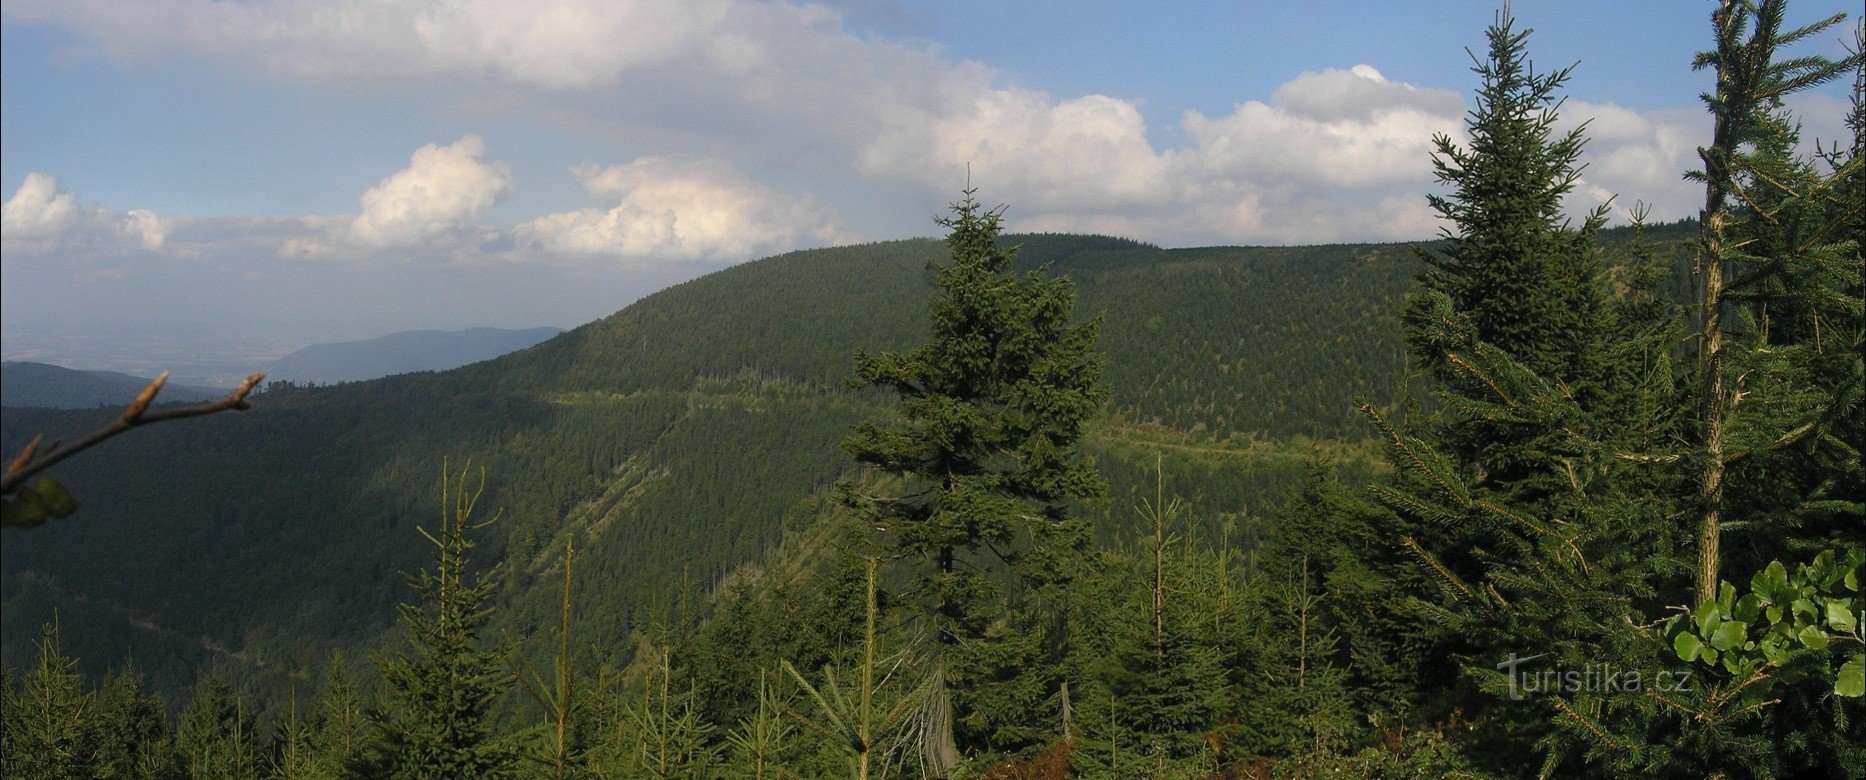 Котел PR Malenovický - вид на западный склон Малчора (сентябрь 2010 г.)